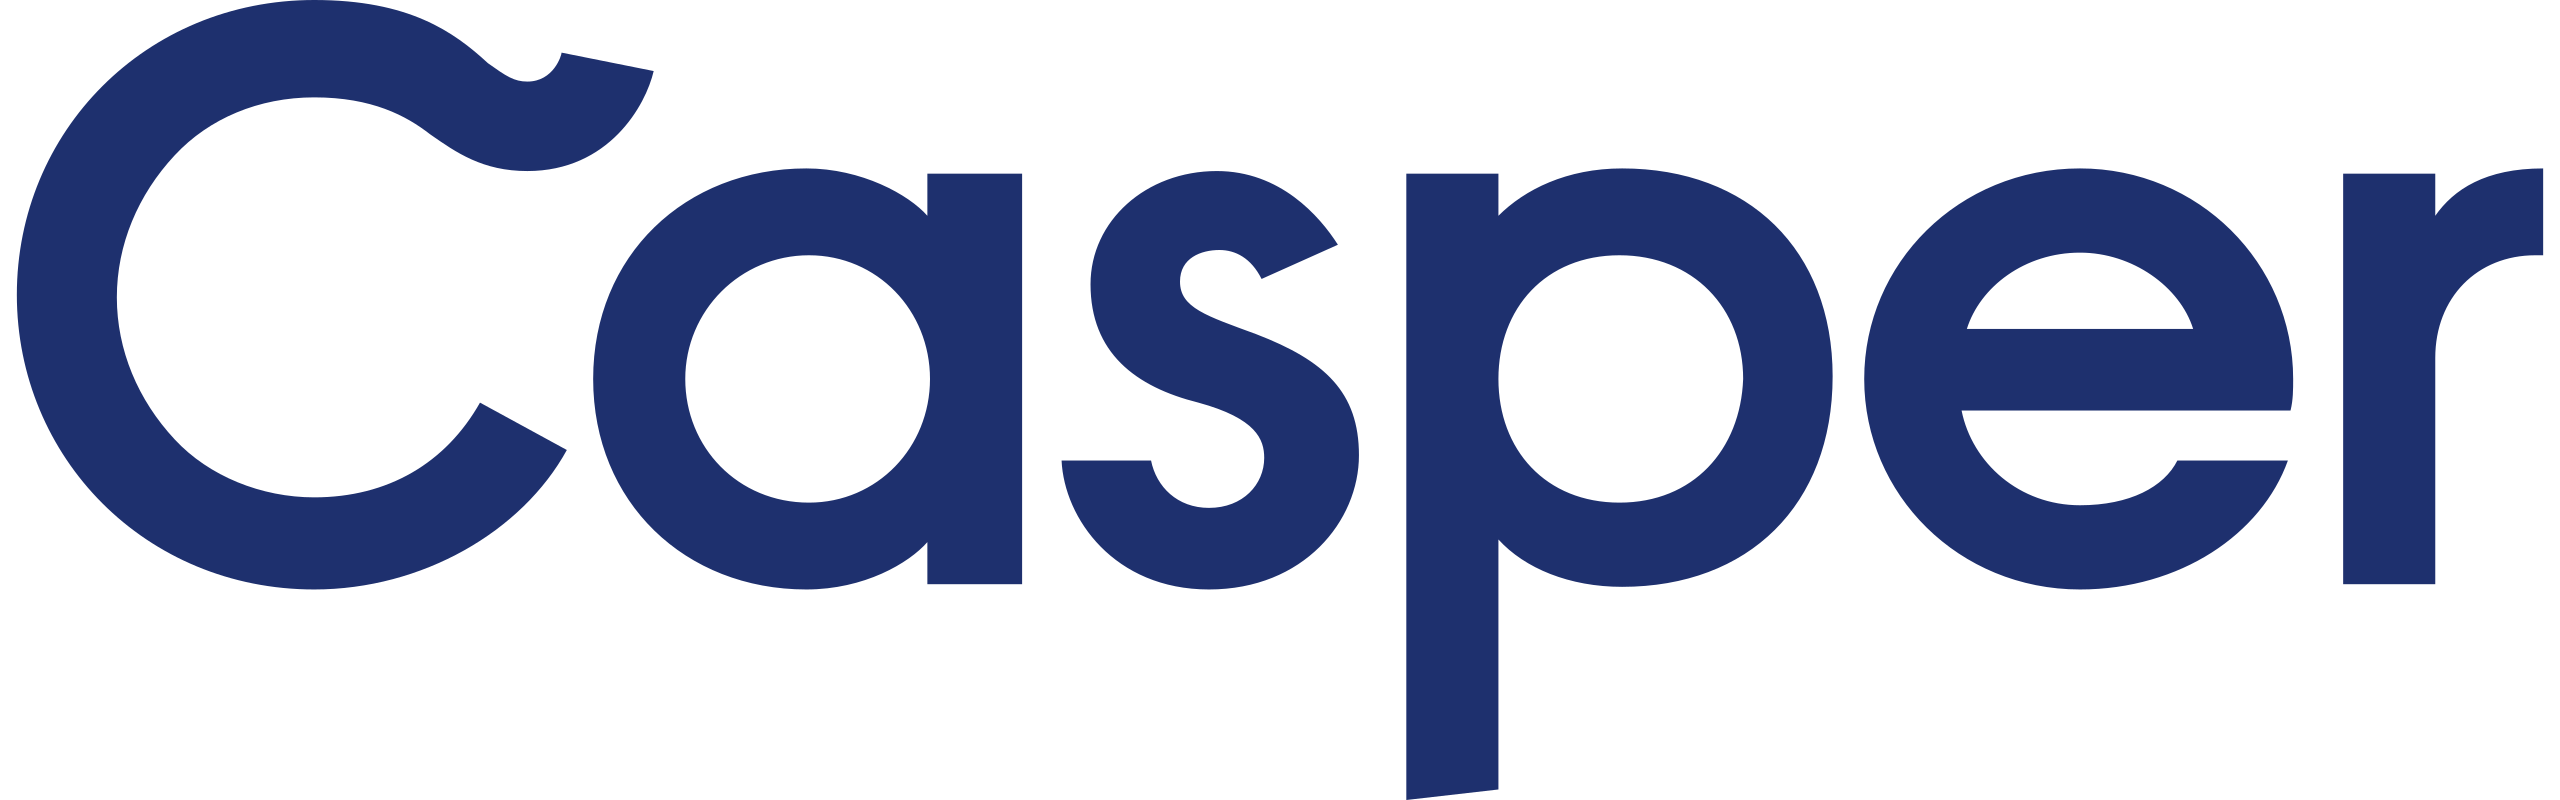 Casper_Sleep_logo.svg